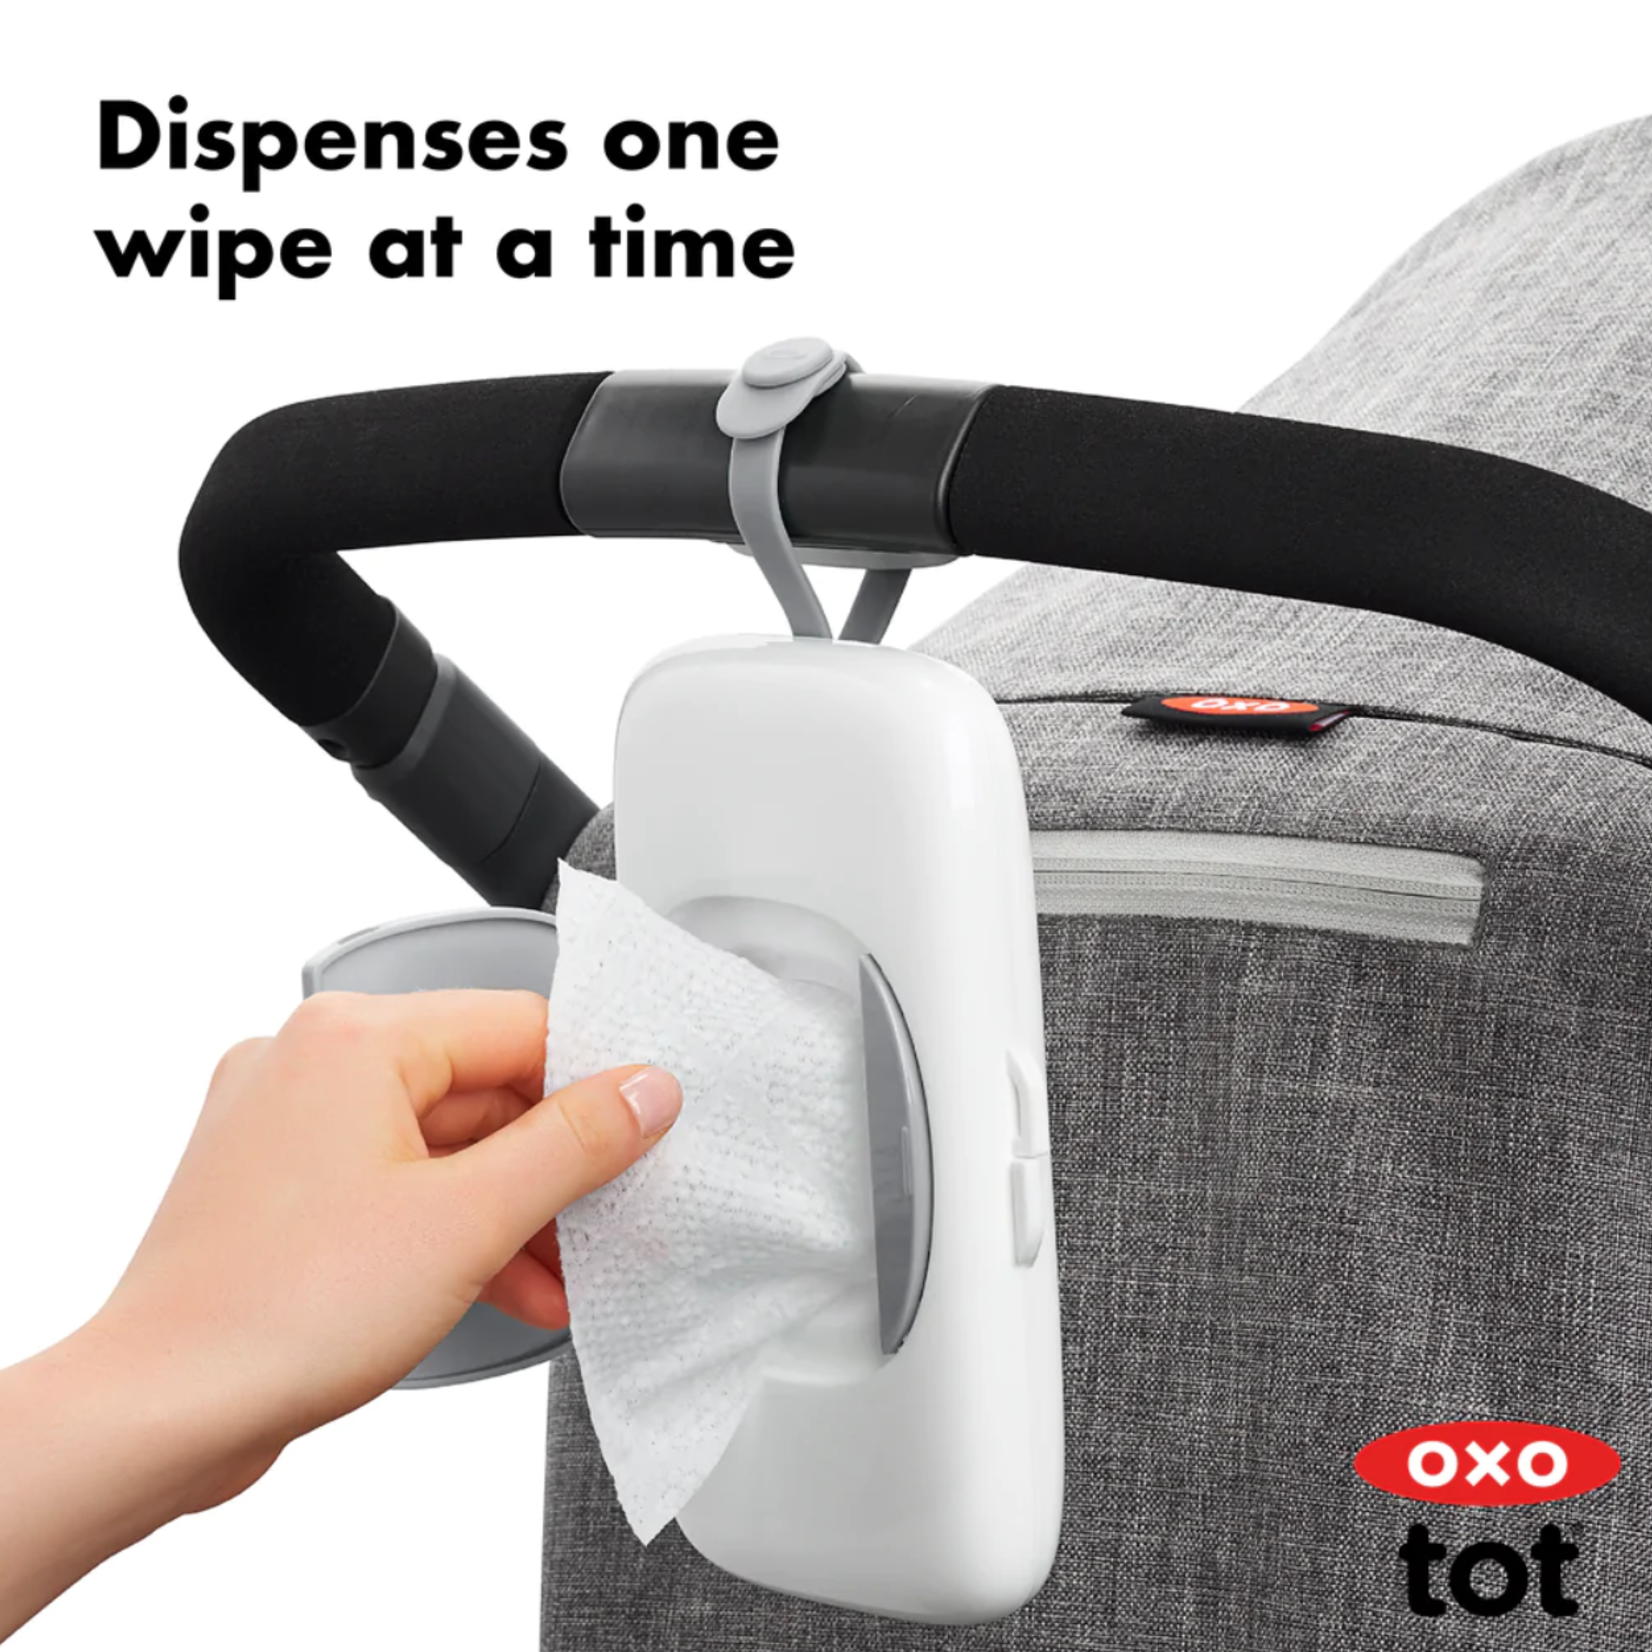 OXO Tot ON THE GO WIPES DISPENSER Grey